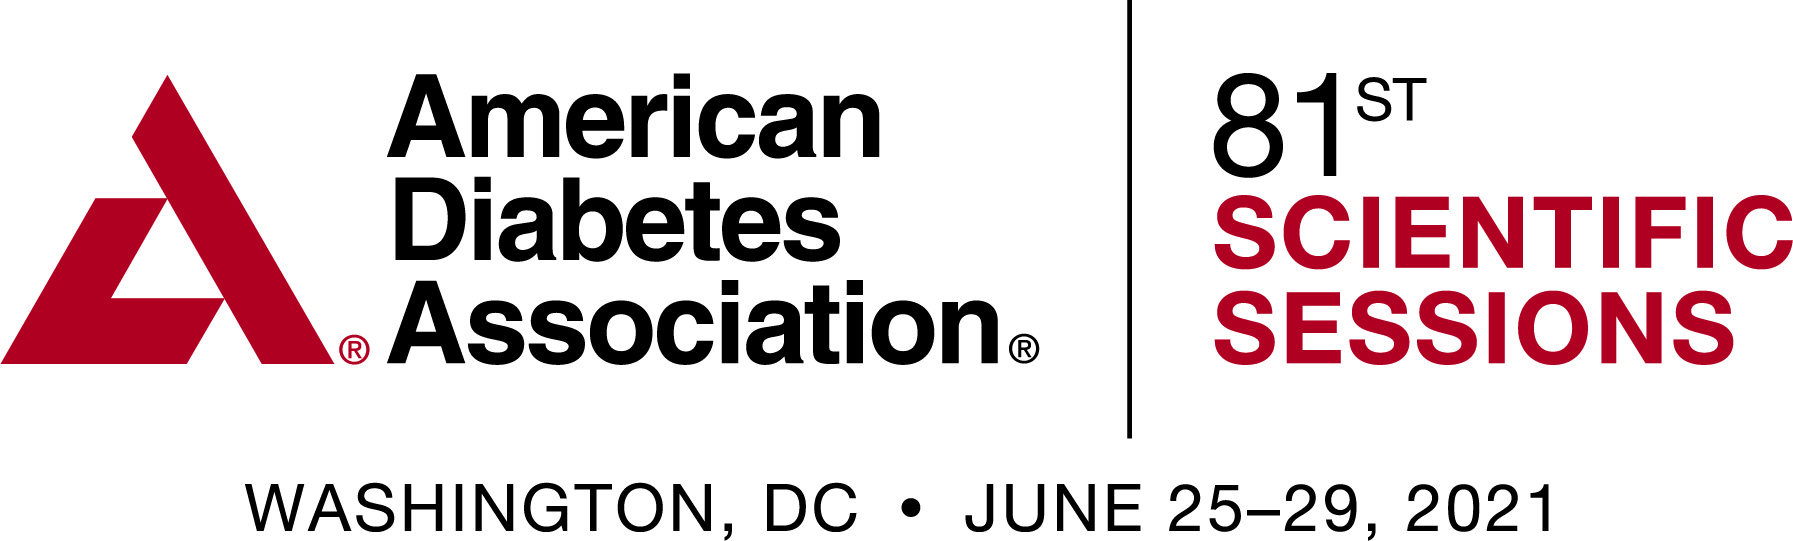 American Diabetes Association's 81st Scientific Sessions ADA 2021